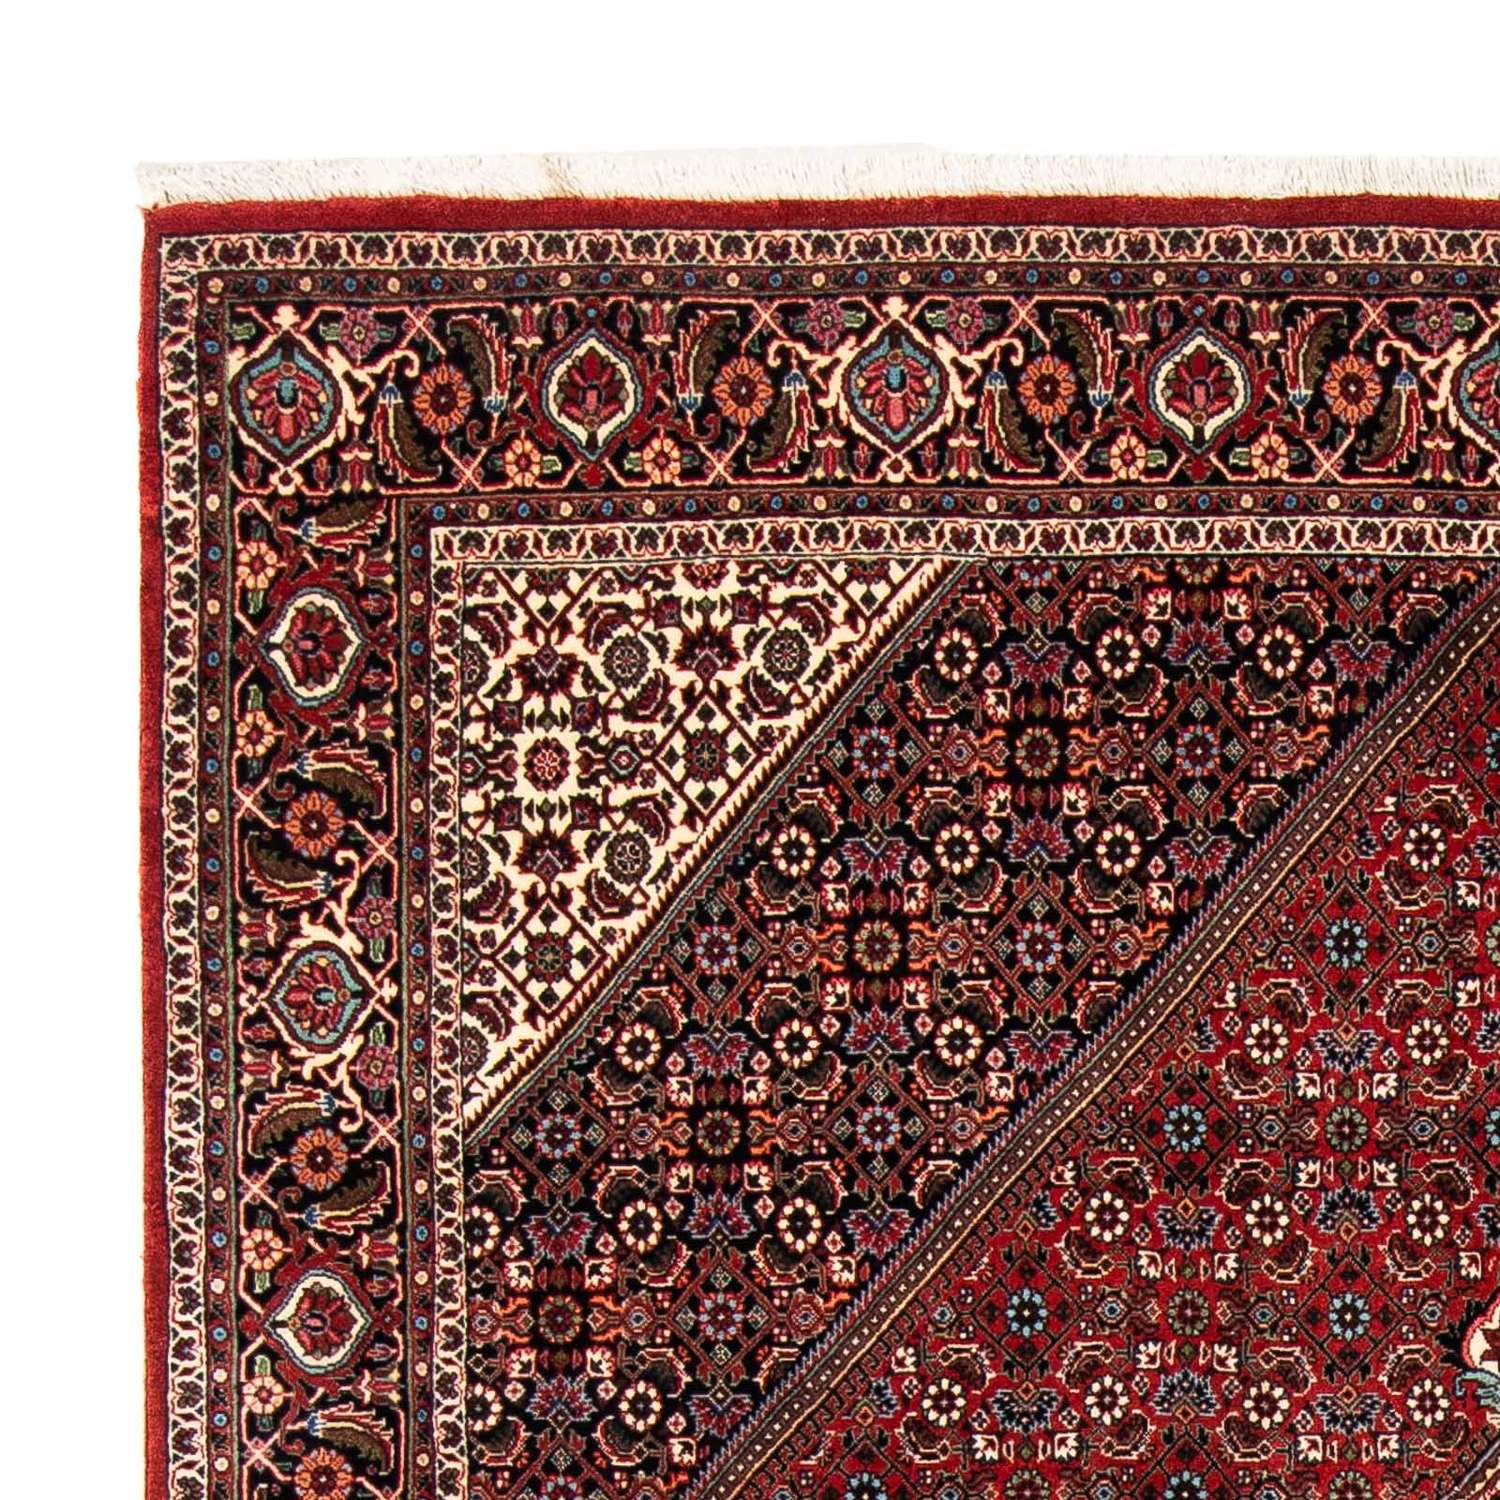 Tapis persan - Bidjar - 258 x 169 cm - rouge foncé